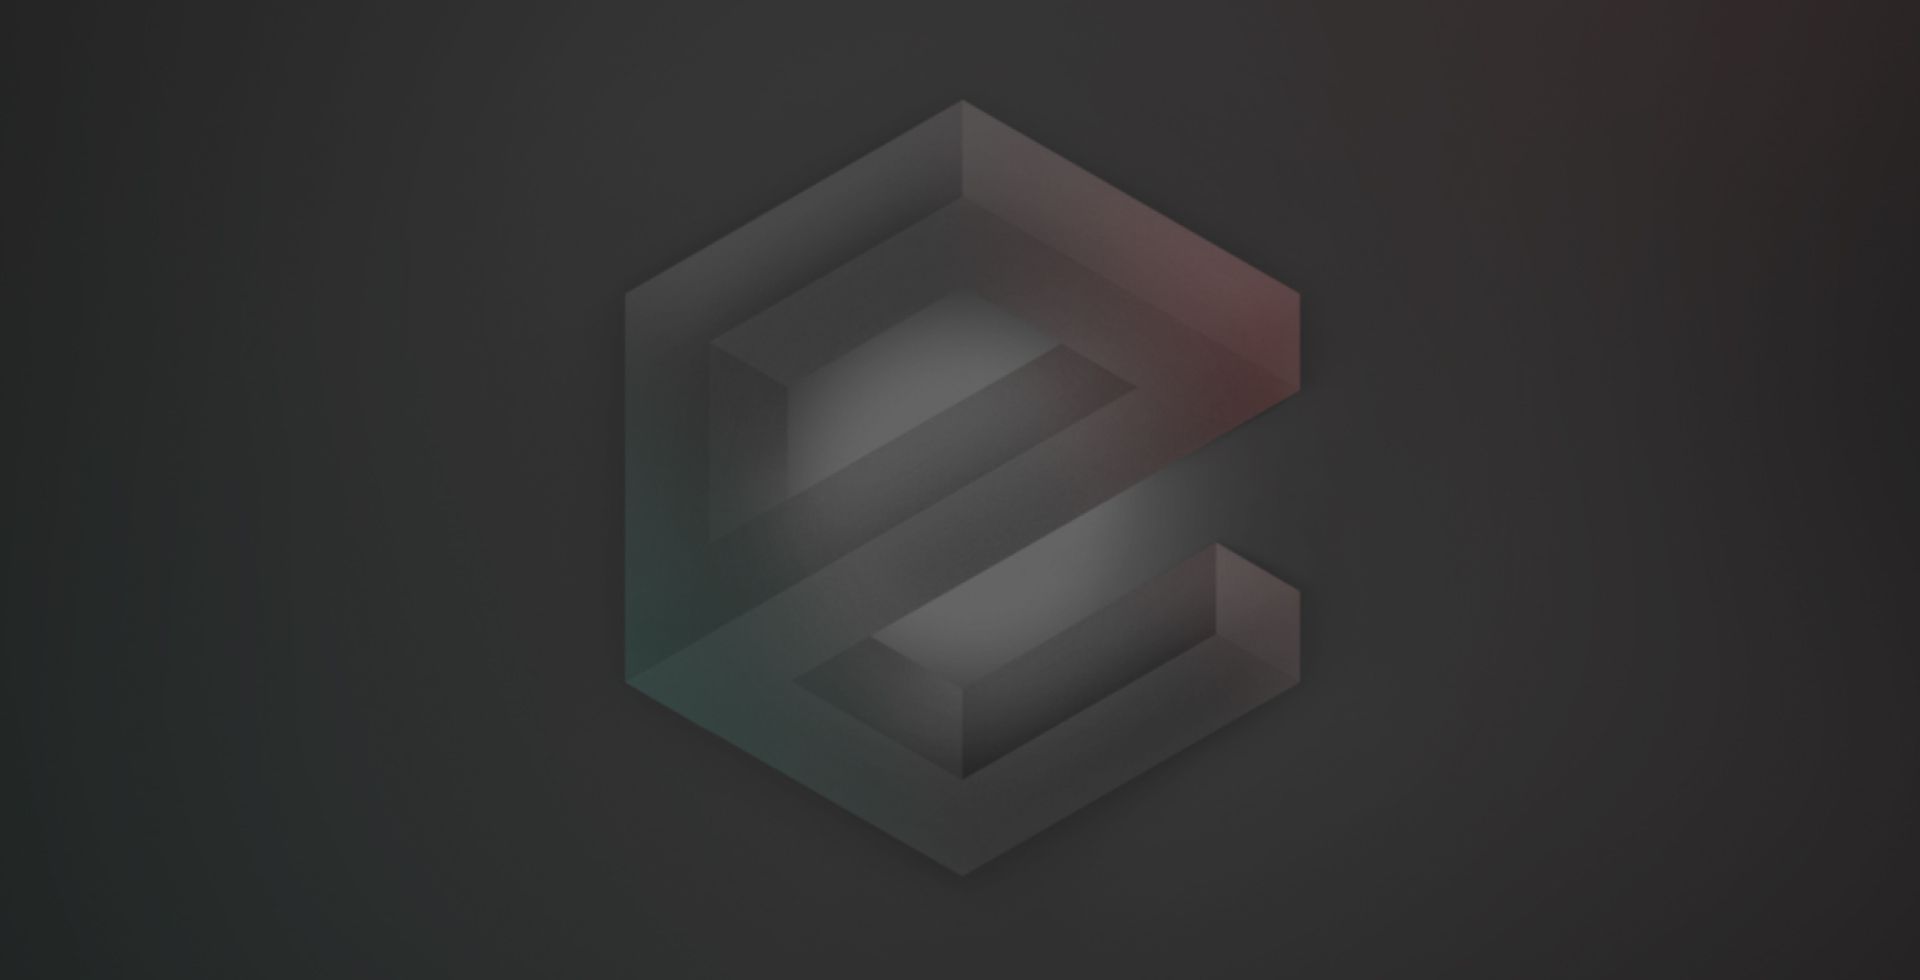 Eberus logo on a grey background